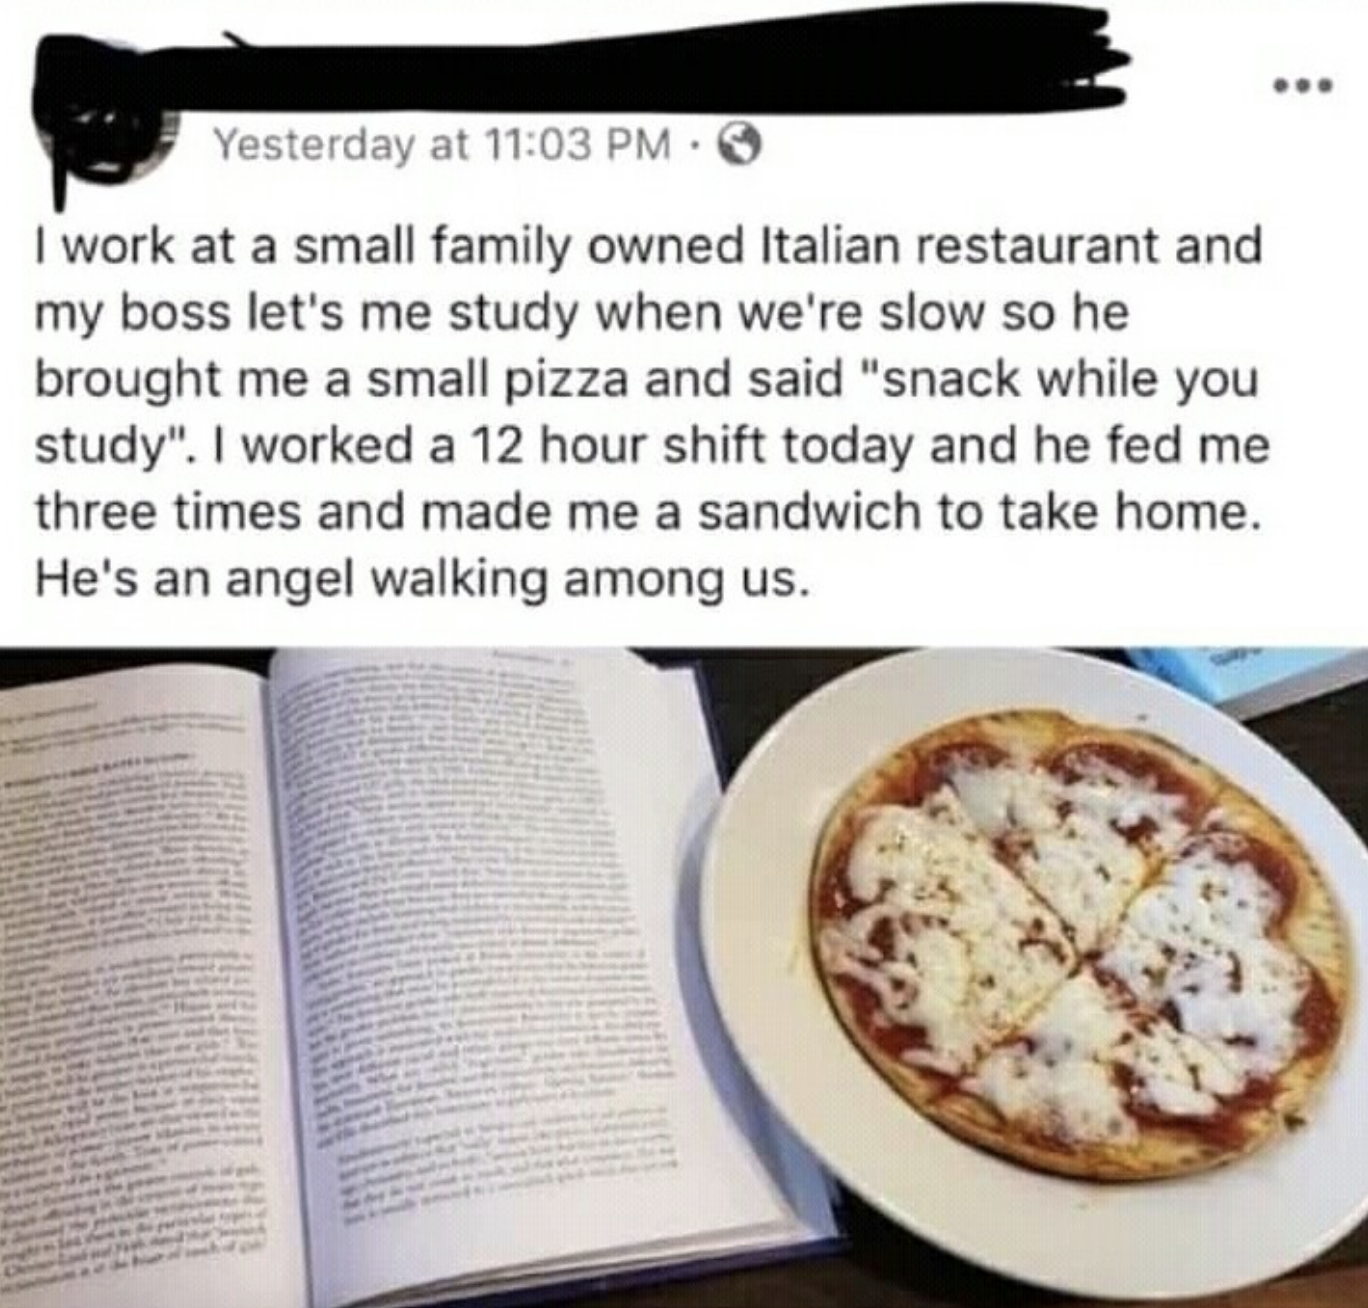 Boss feeding employee while they study